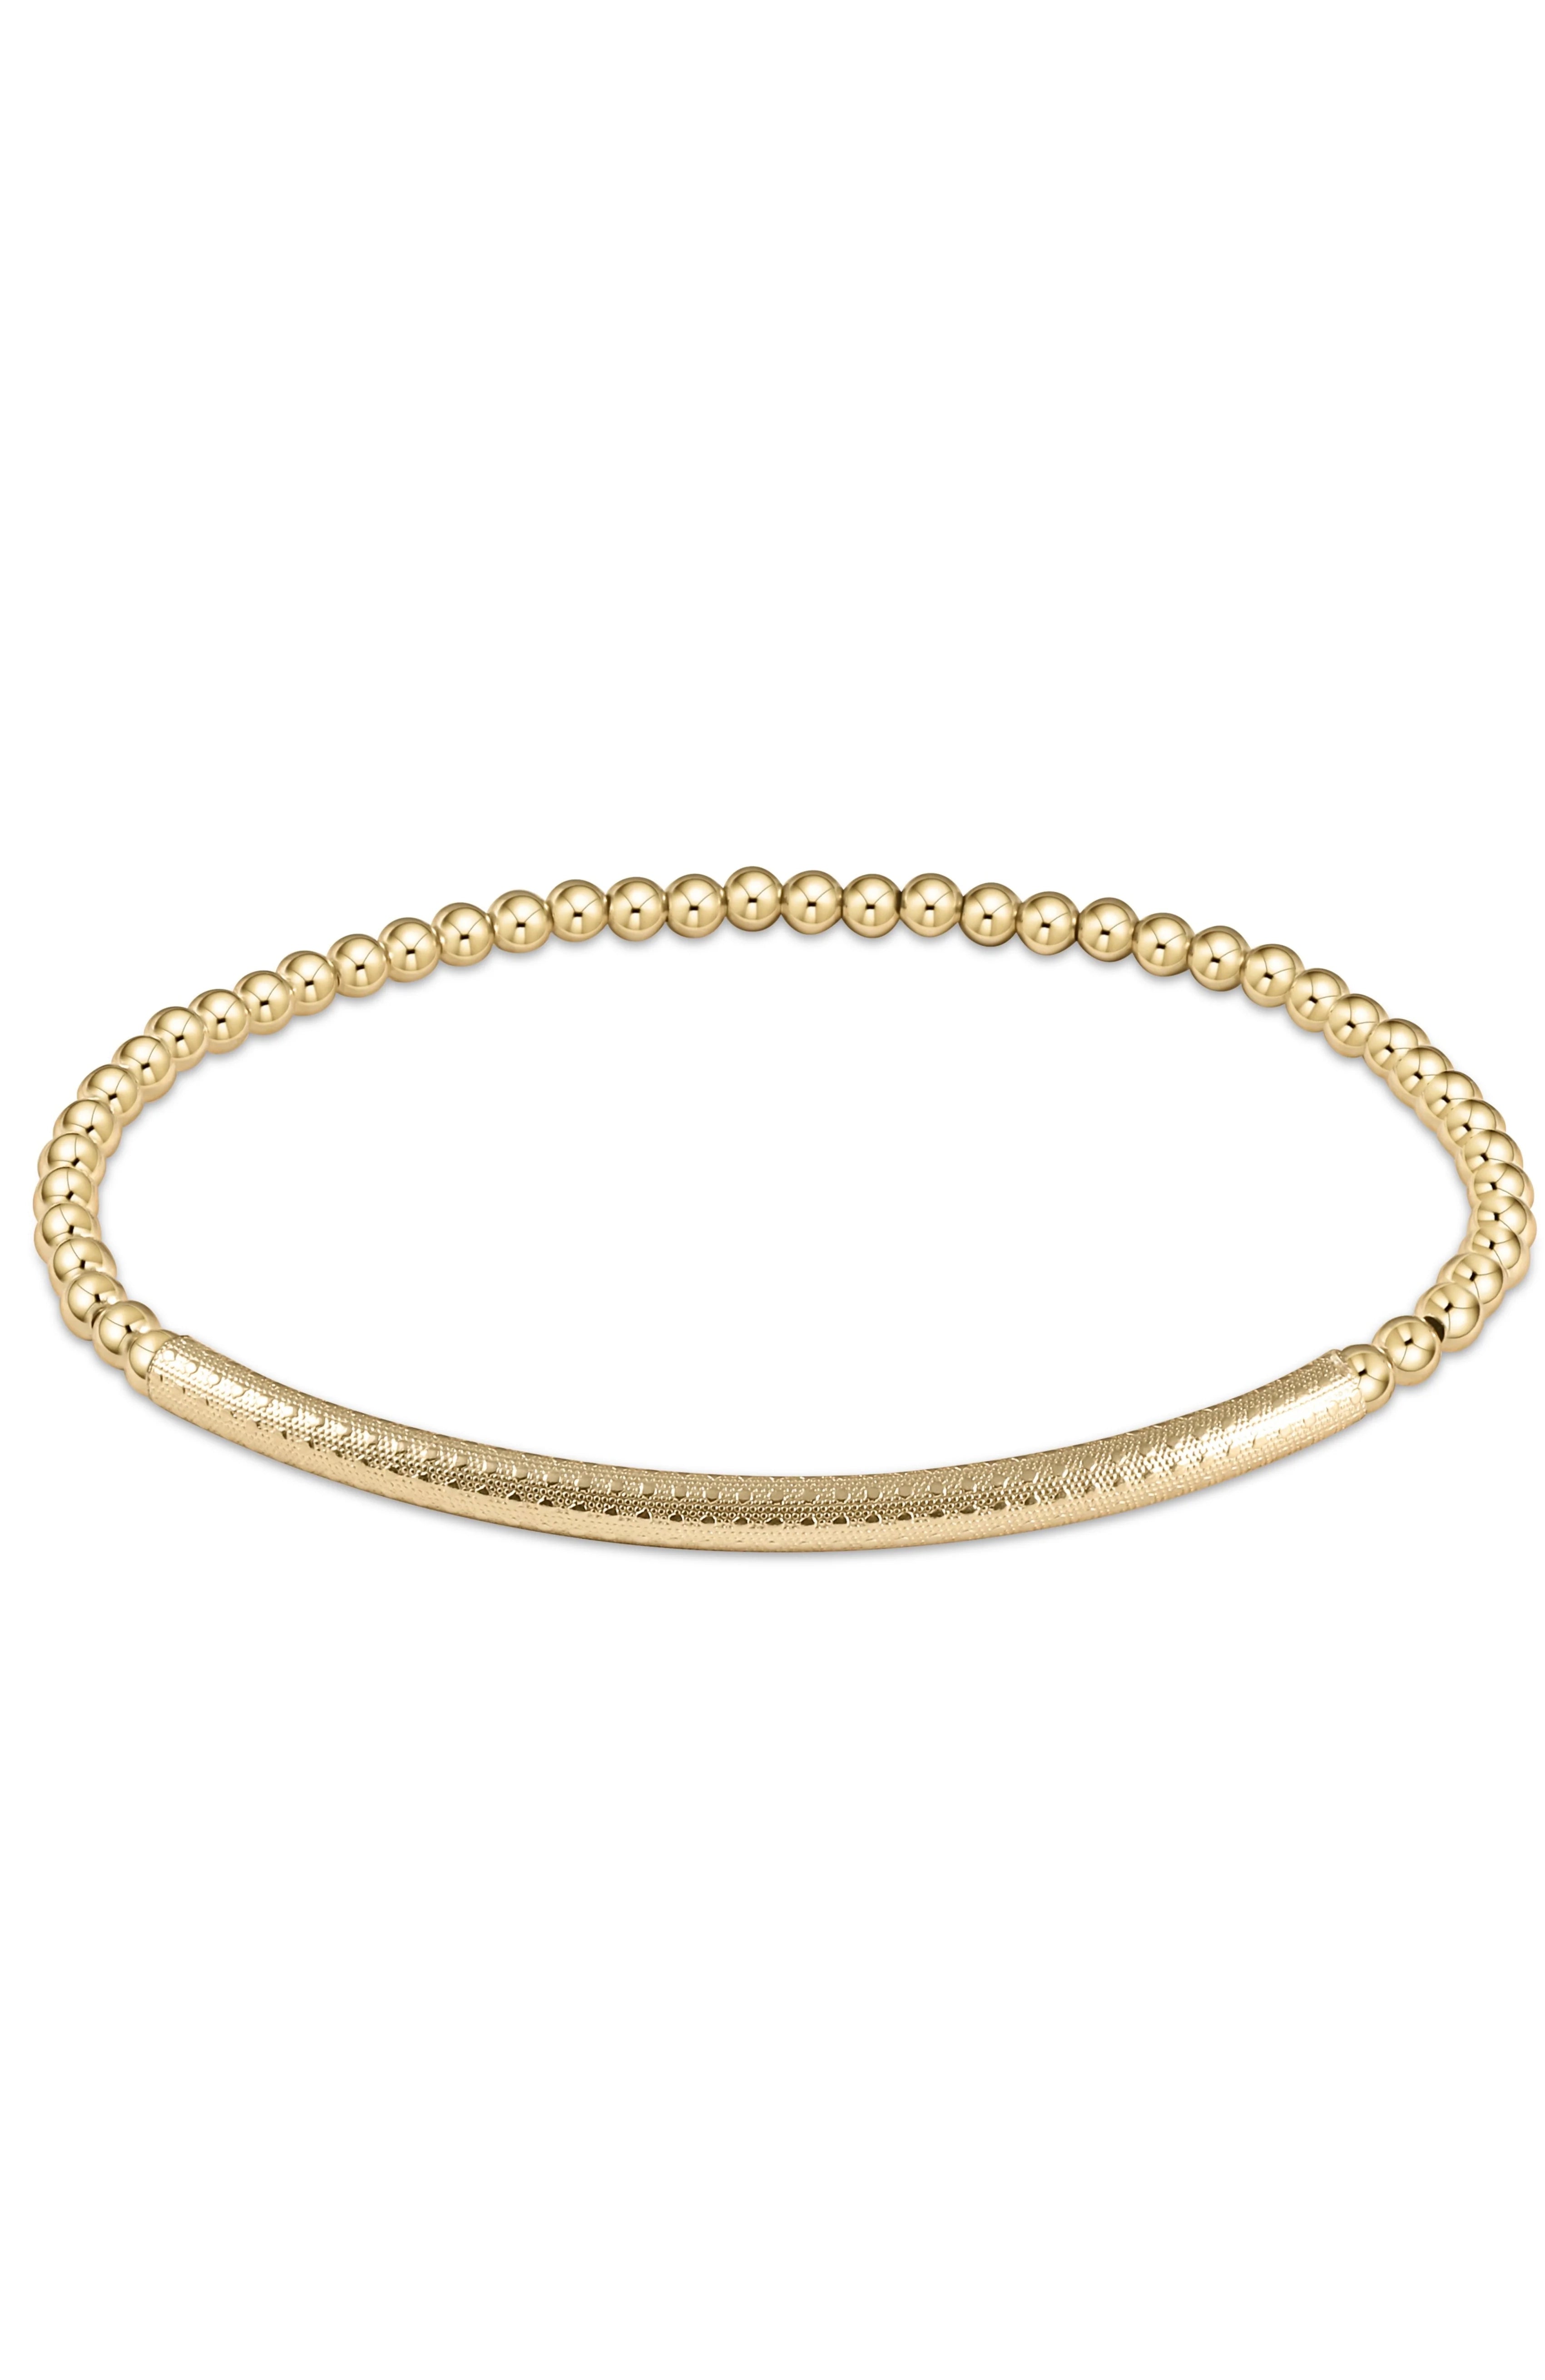 Bliss Bar Textured Bead Bracelet 3mm Gold